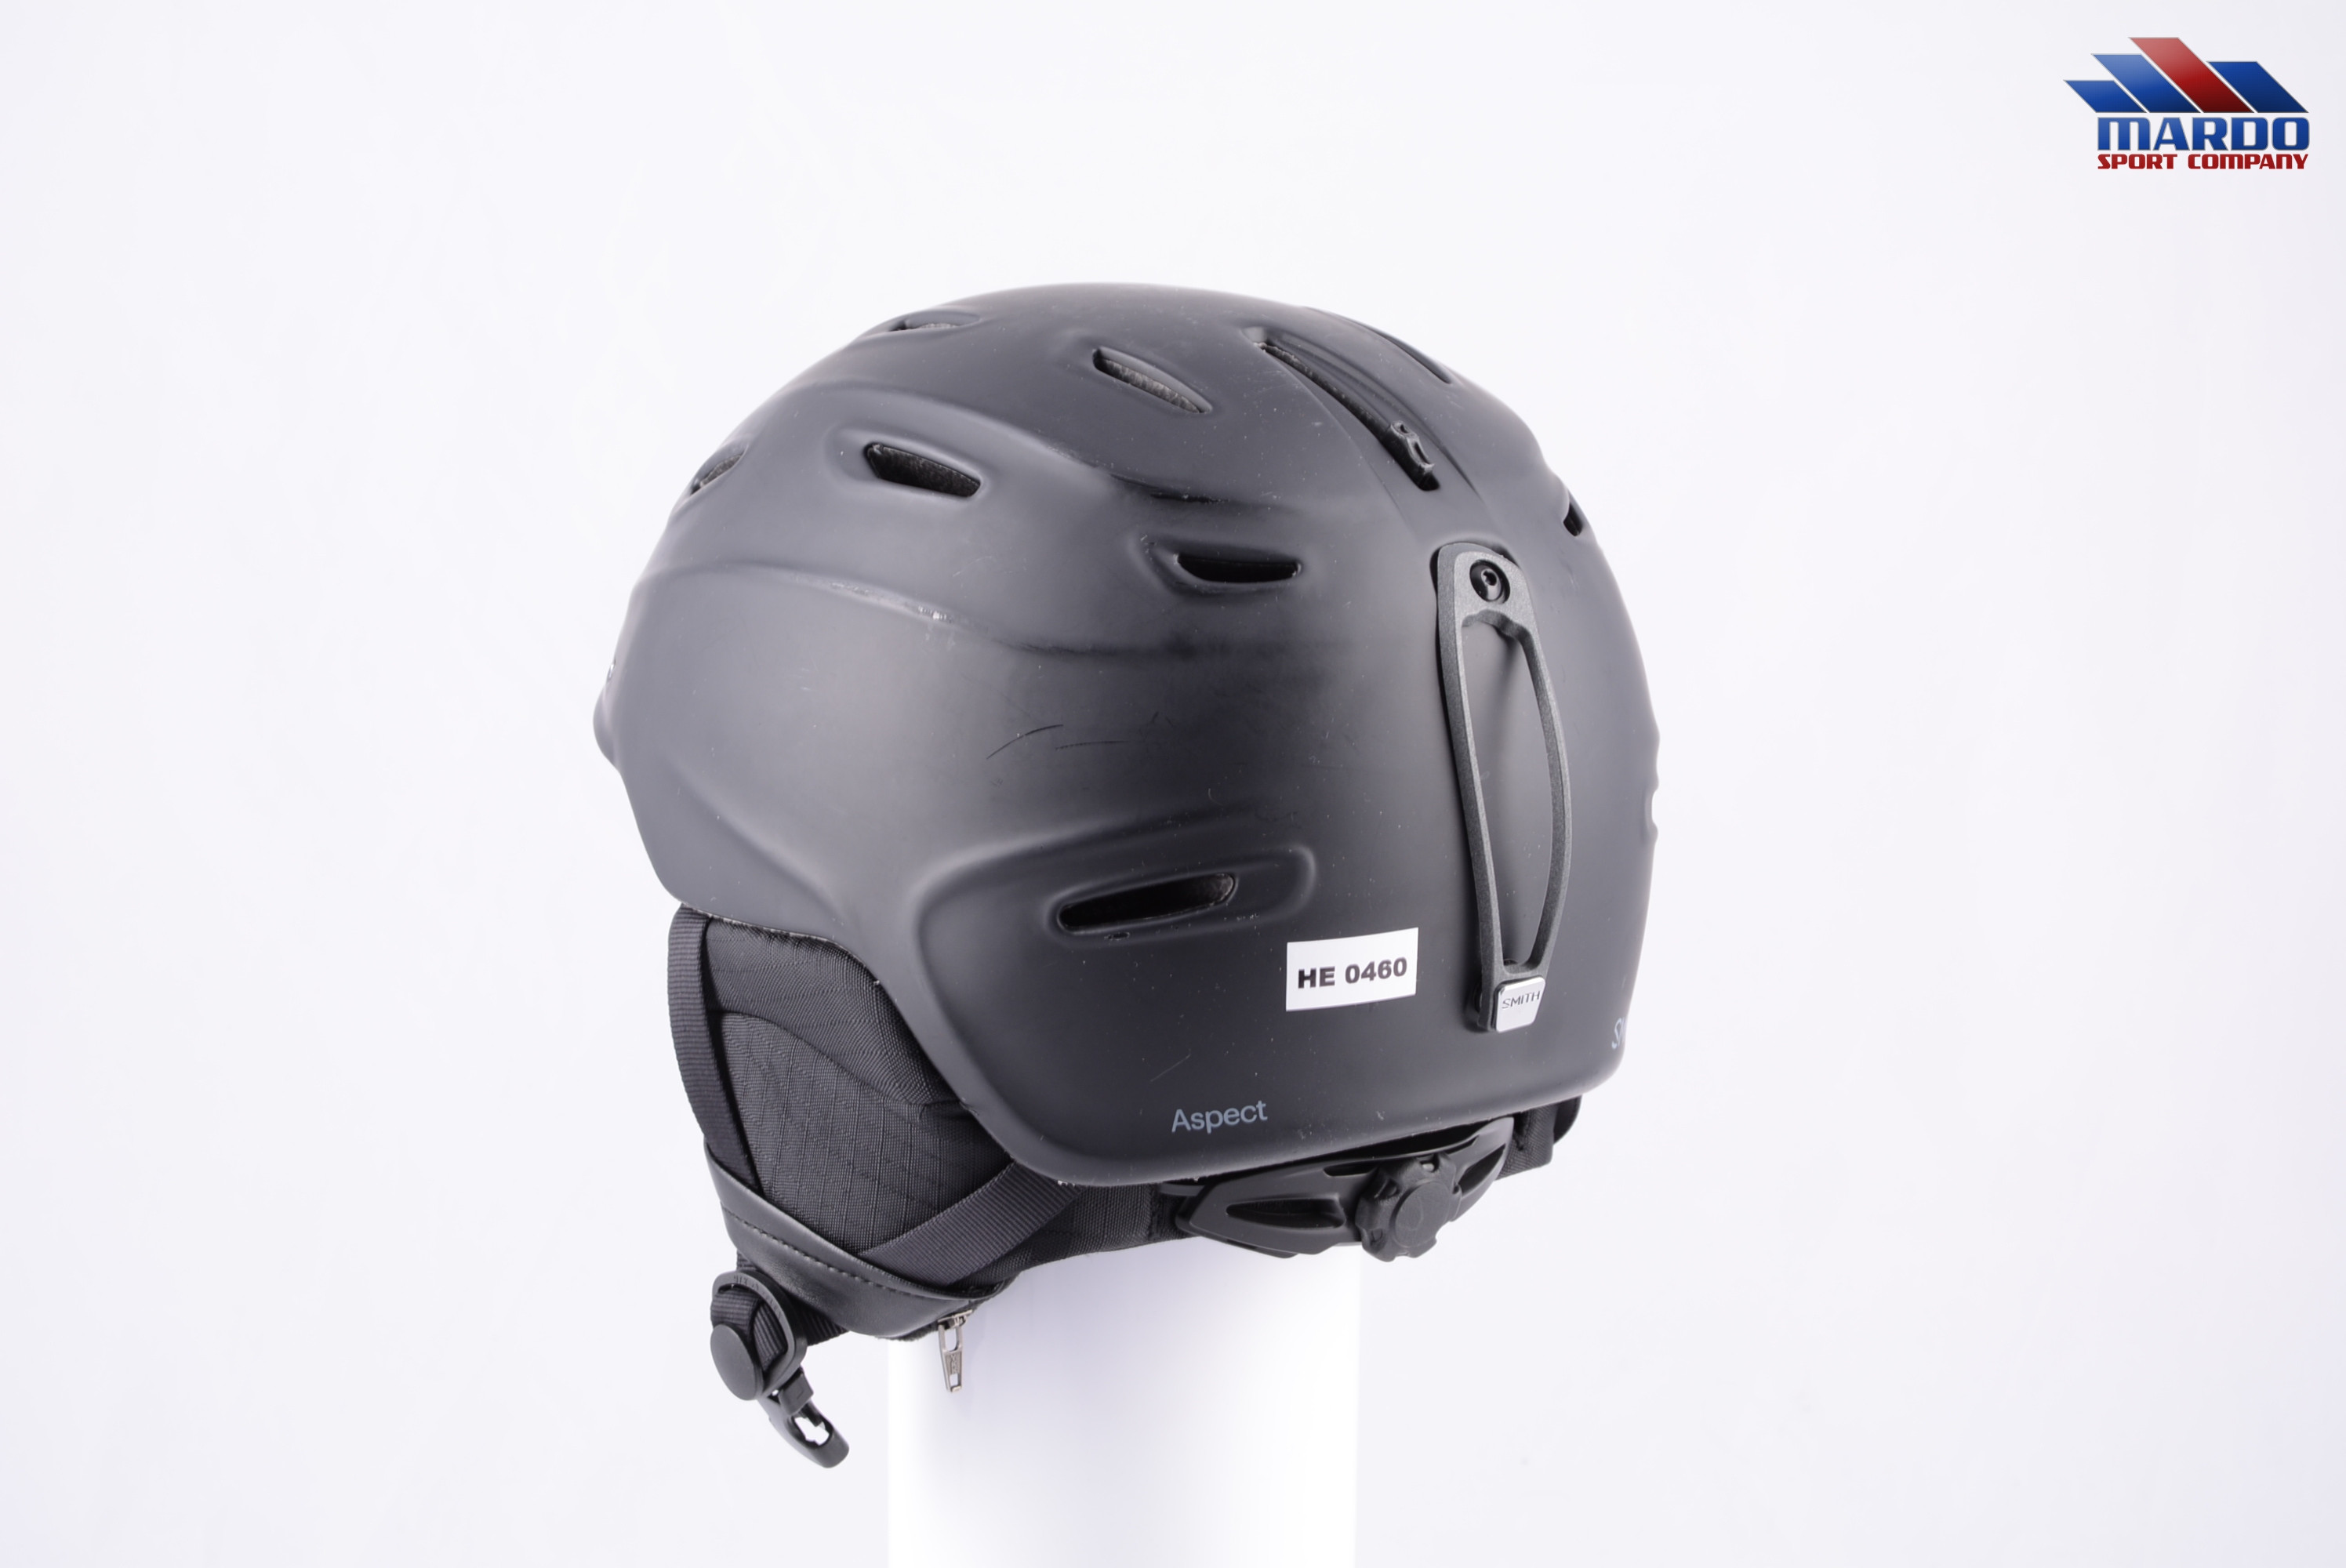 ski/snowboard helmet SMITH ASPECT black, ULTIMATE integration, AIREVAC, ventilation, adjustable ( TOP condition ) -